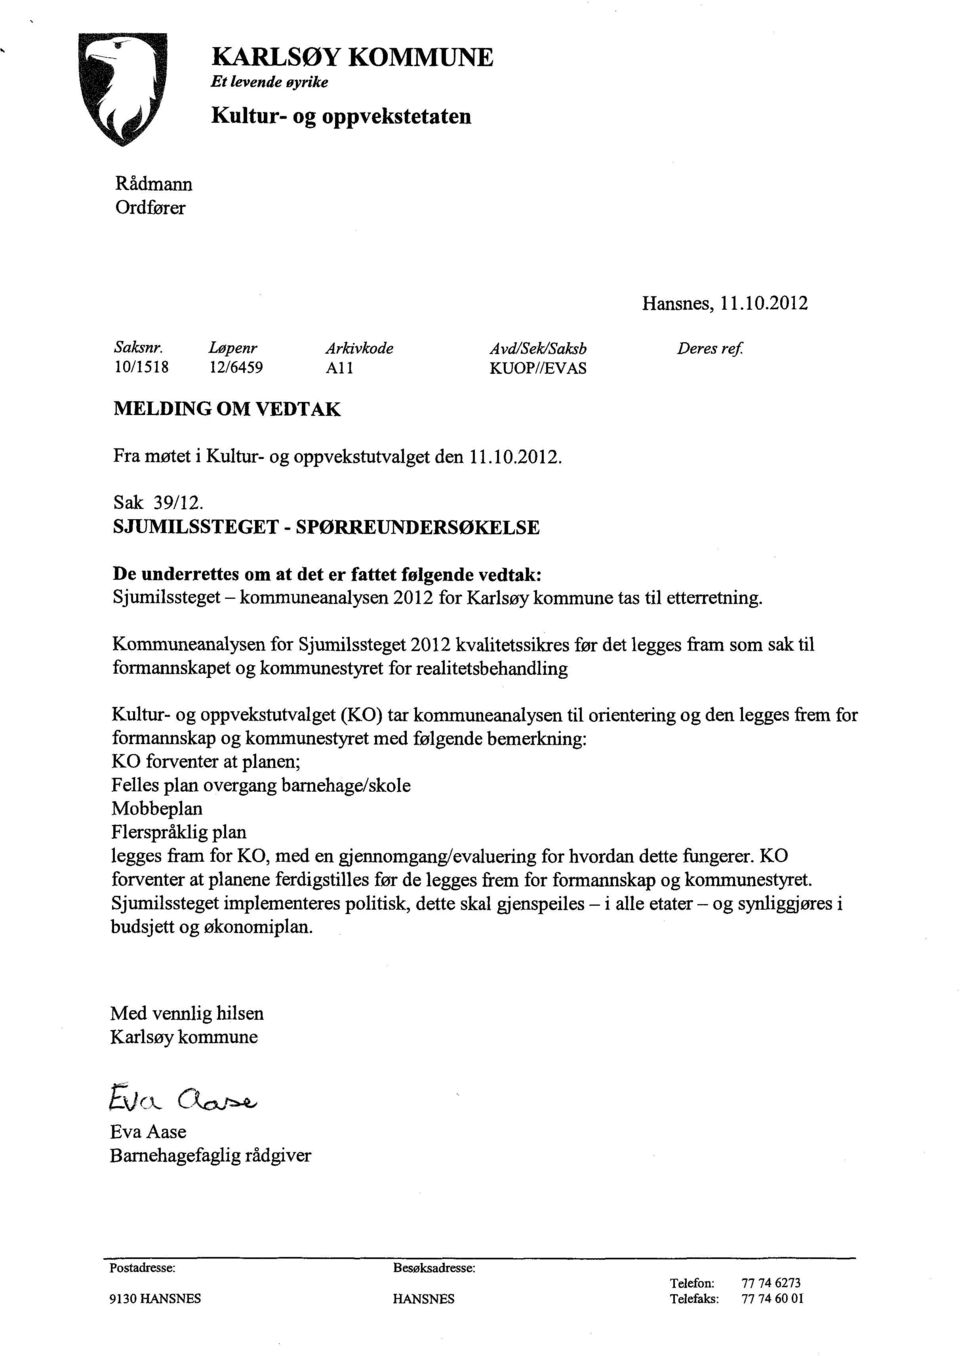 SJUMILSSTEGET - SPØRREUNDERSØKELSE De underrettes om at det er fattet folgende vedtak: Sjumilssteget kommuneanalysen 2012 for Karlsøy kommune tas til etterretning.